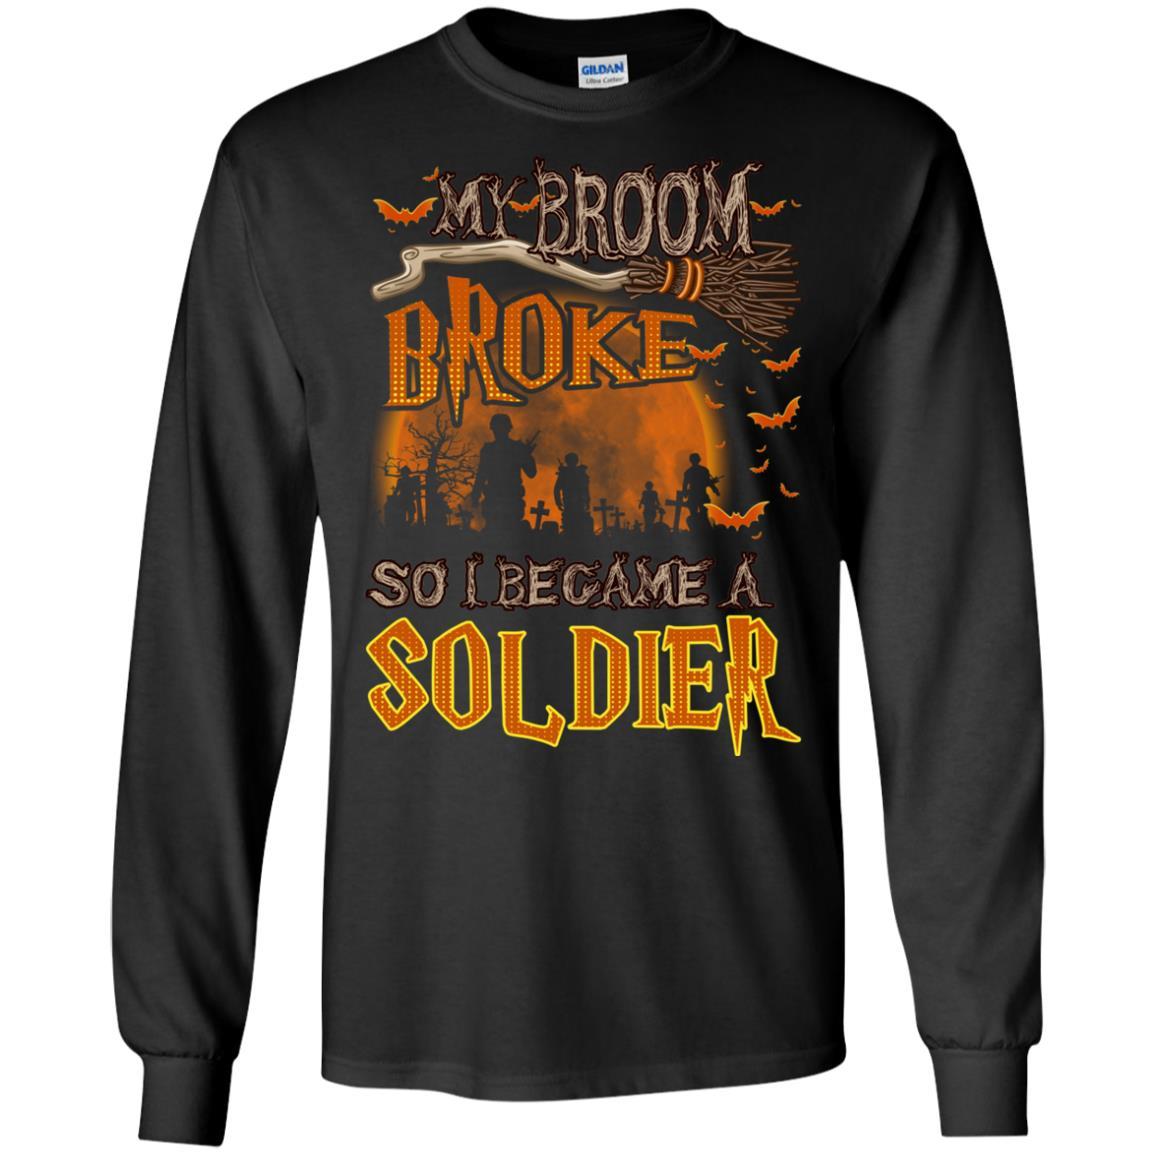 Military T-Shirt "My Broom Broke So I Became A Soldier Men On" Front-TShirt-General-Veterans Nation